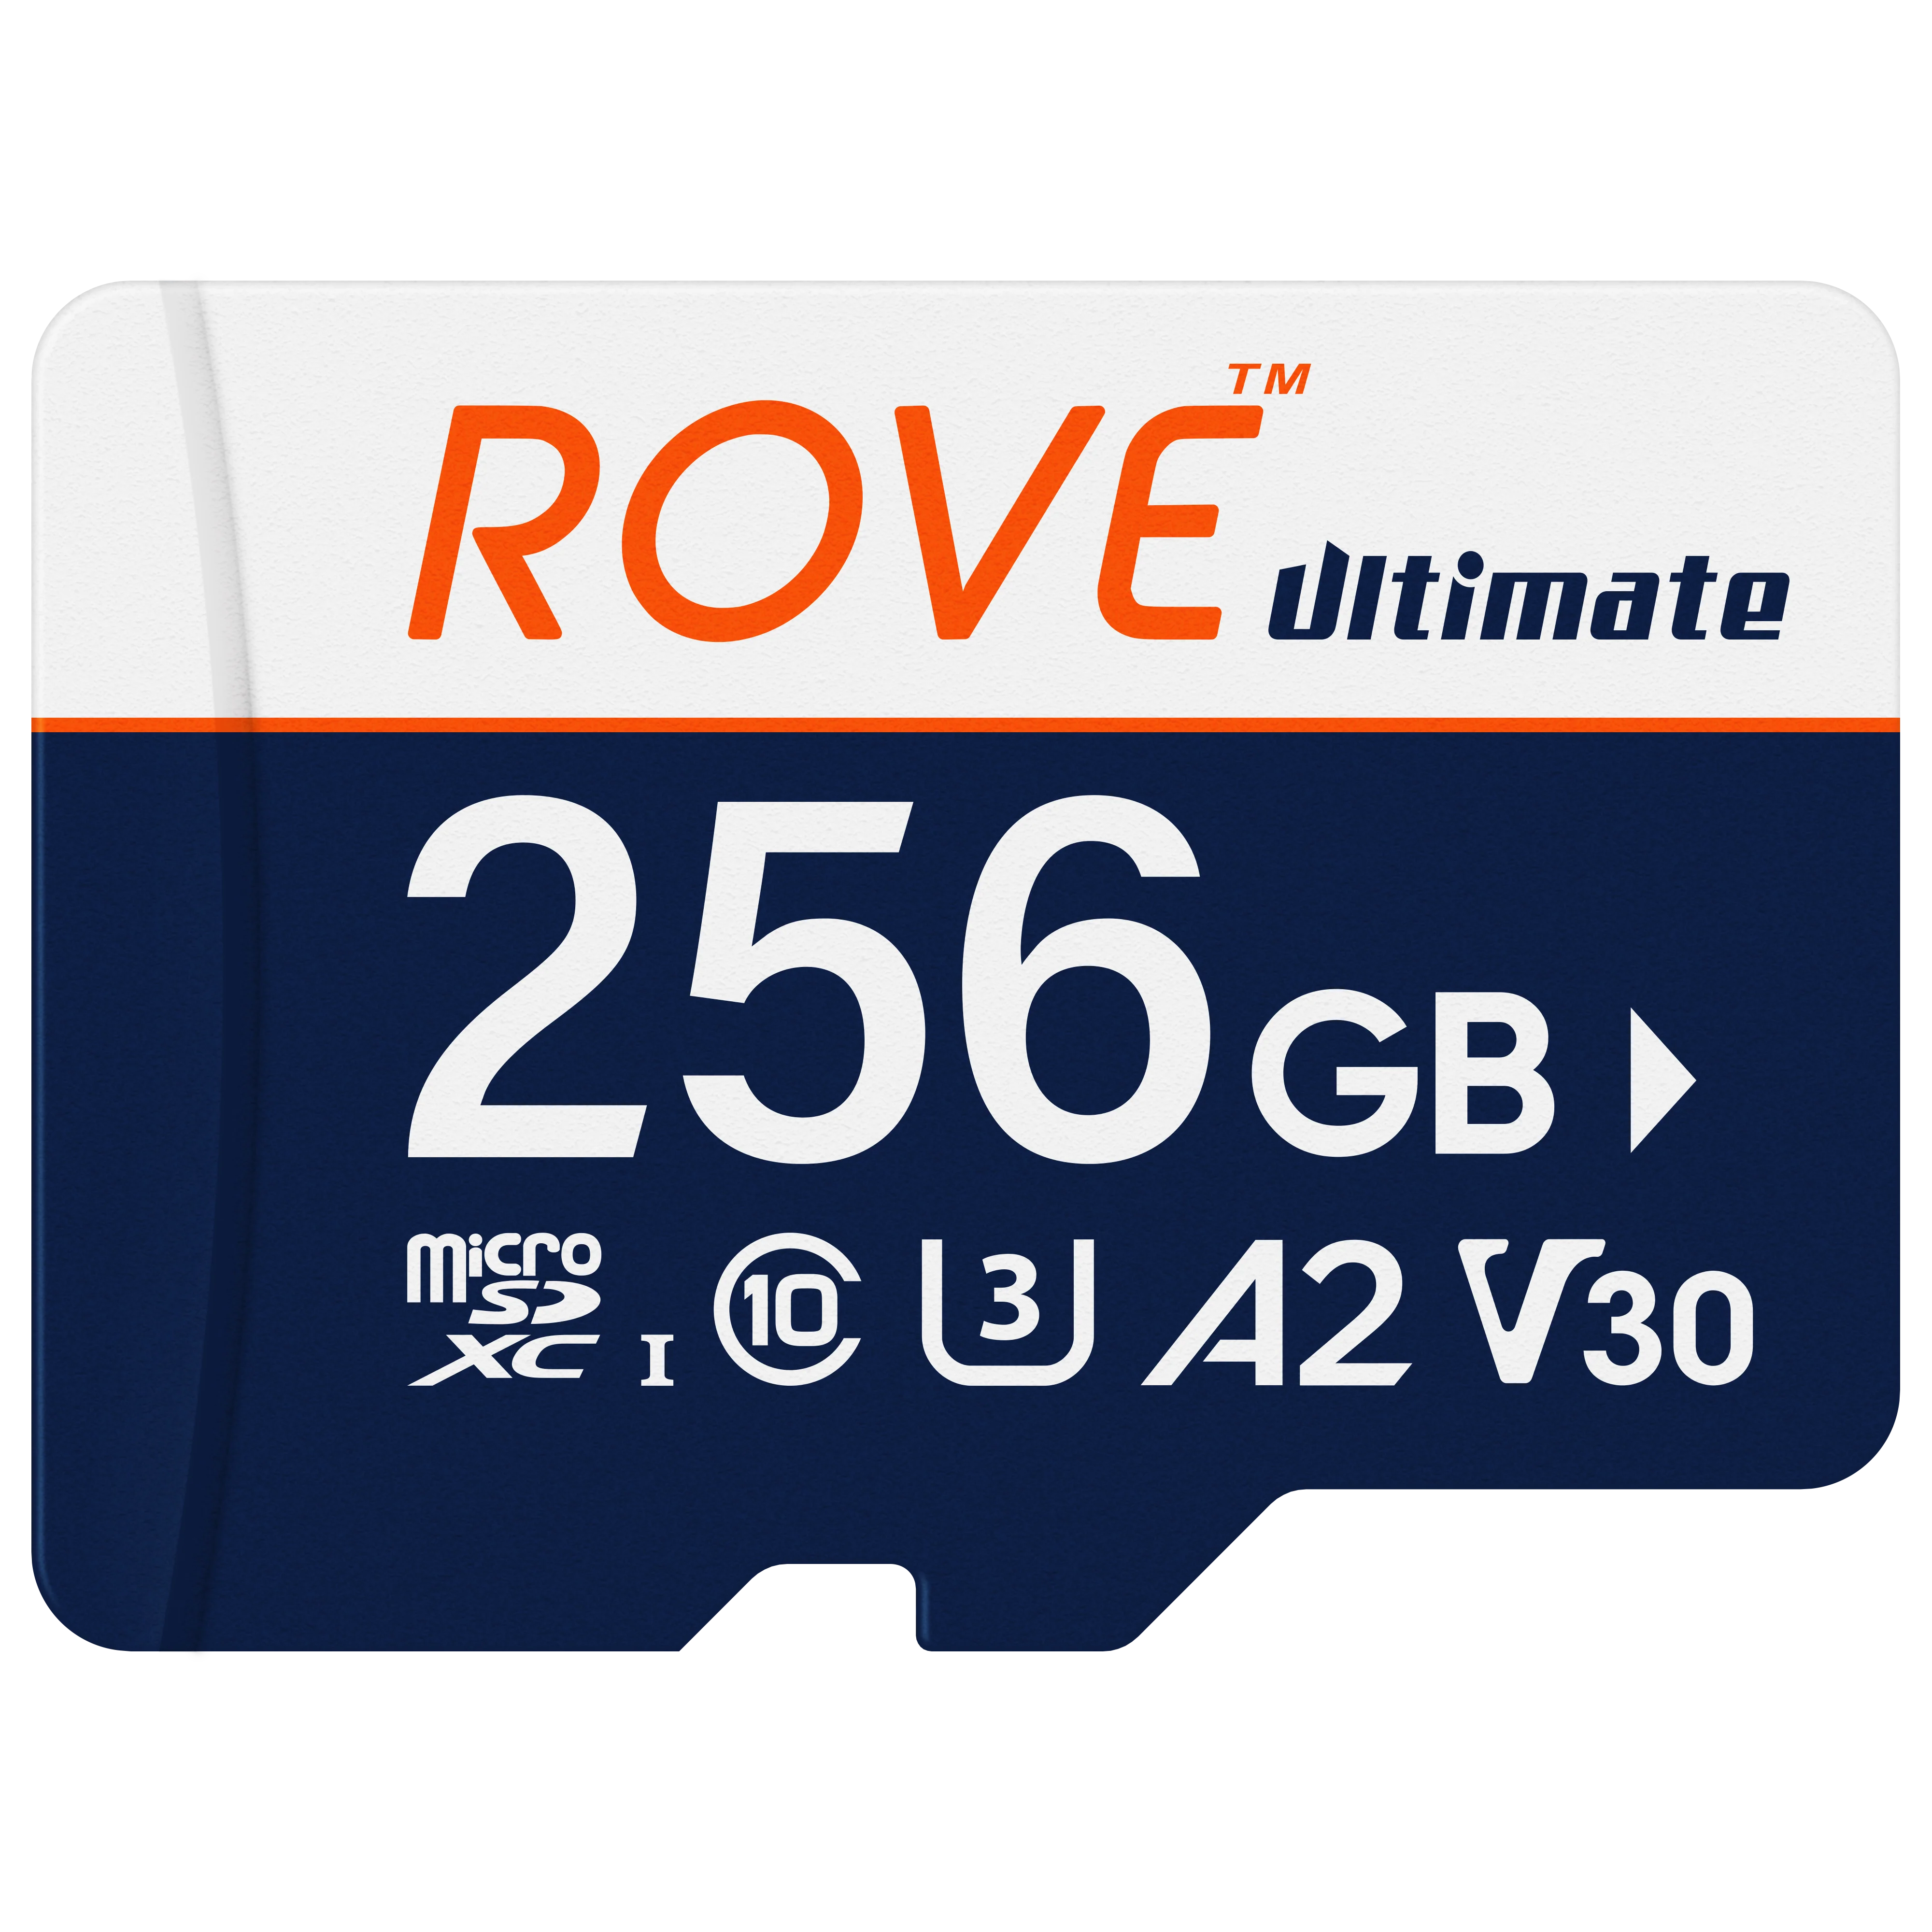 R2-4K Dash Cam | 256 GB Micro SD Bundle | GET $29 OFF + FREE 256 GB SD Card